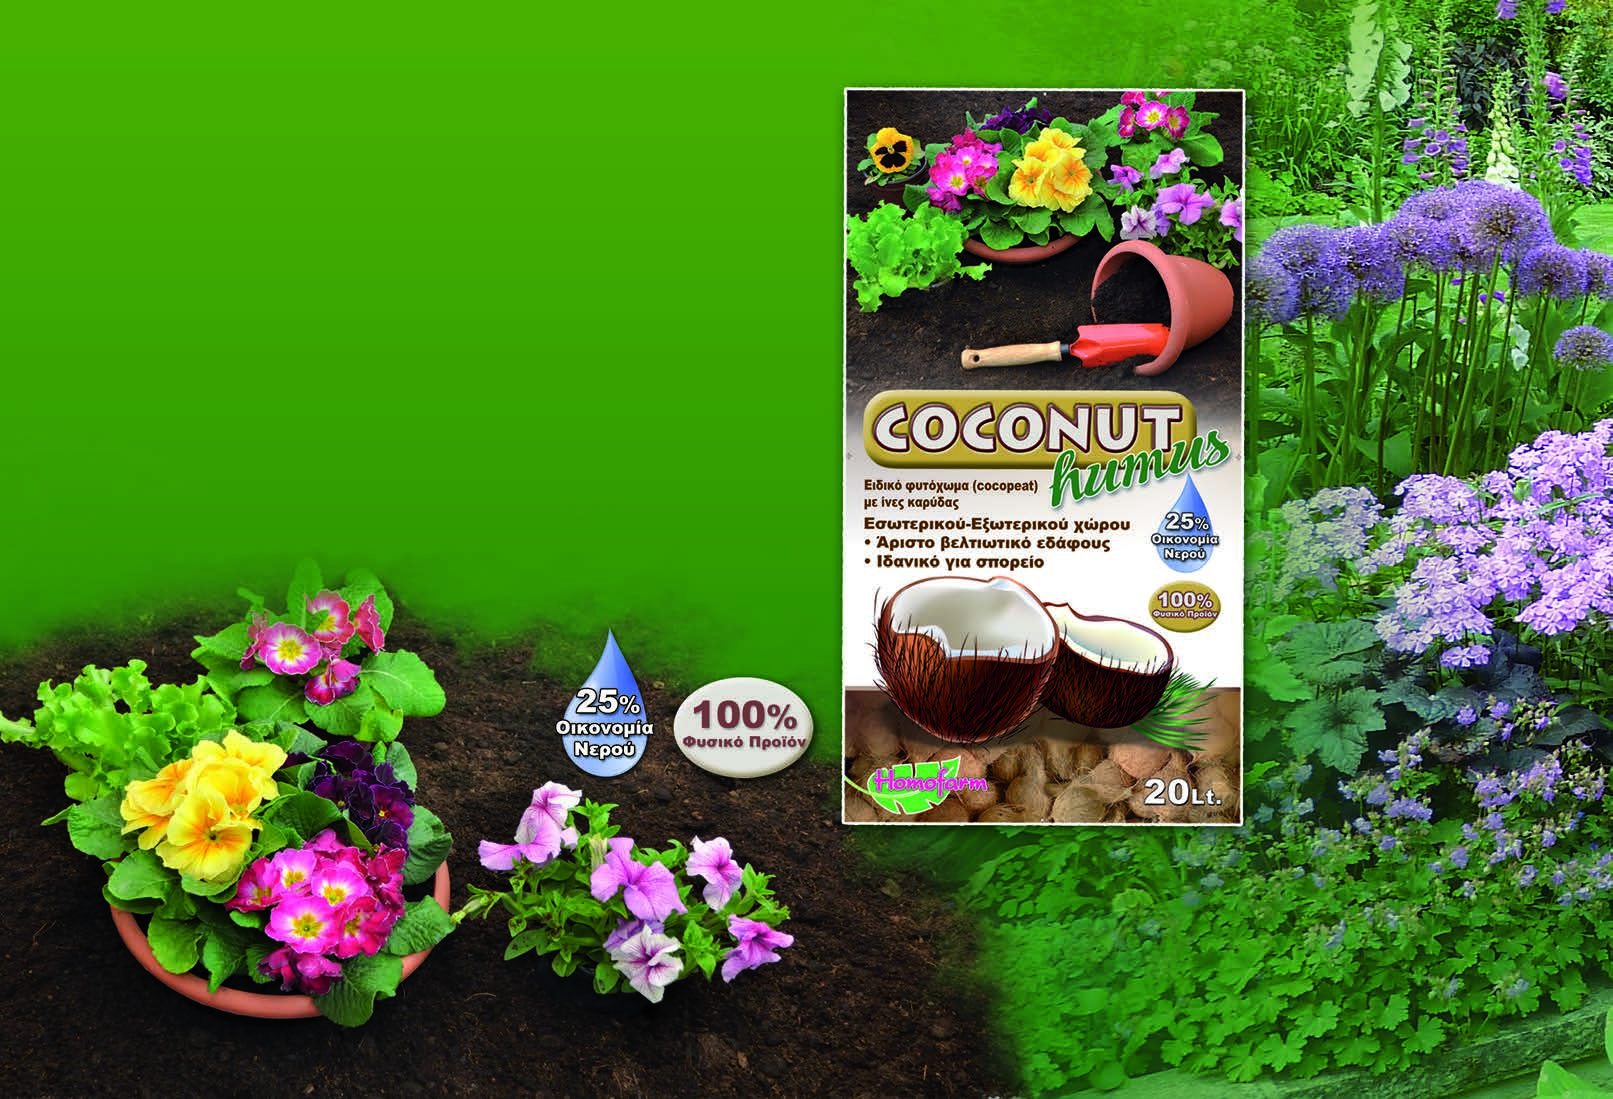 COCONUT HUMUS 20 lt. Το coconut humus είναι ένα εξαιρετικό και πολύ δημοφιλές φυσικό προϊόν που παράγεται από τον φλοιό (κέλυφος) της καρύδας του κοκκοφοίνικα.